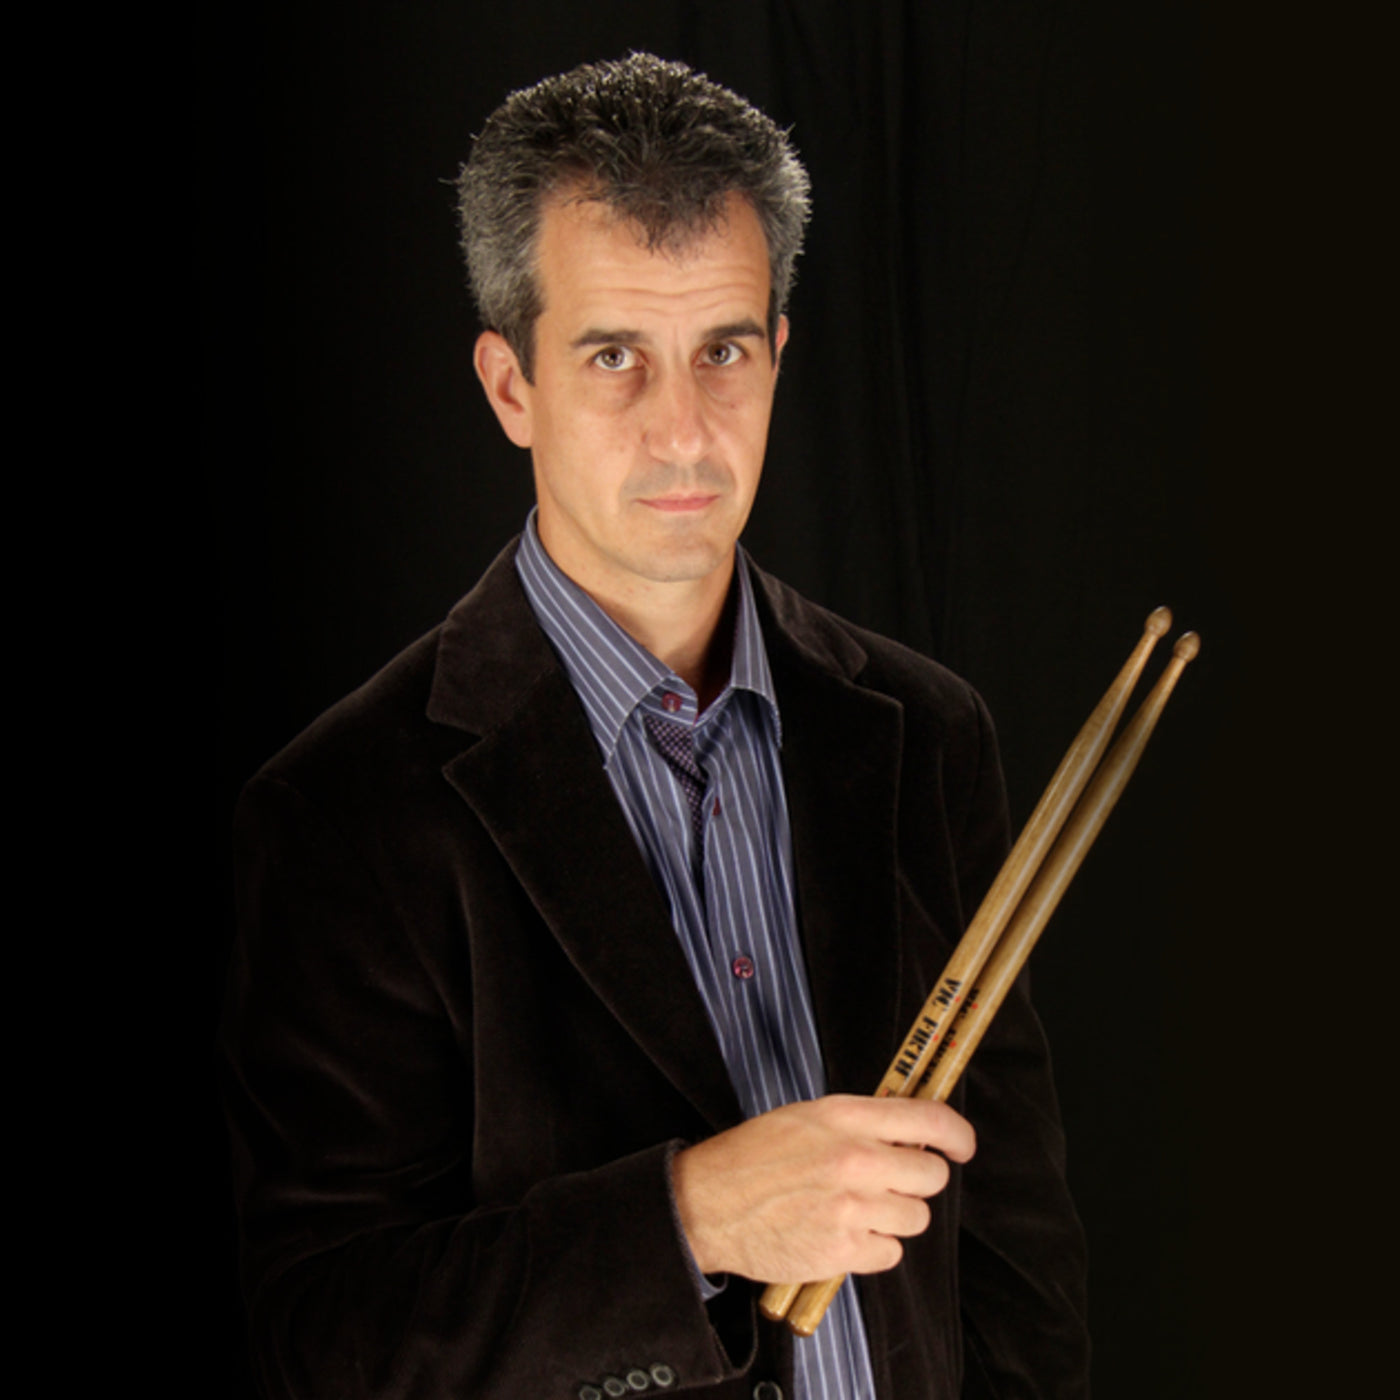 Vic Firth Tim Genis Signature Snare Stick - General Drumstick (STG)